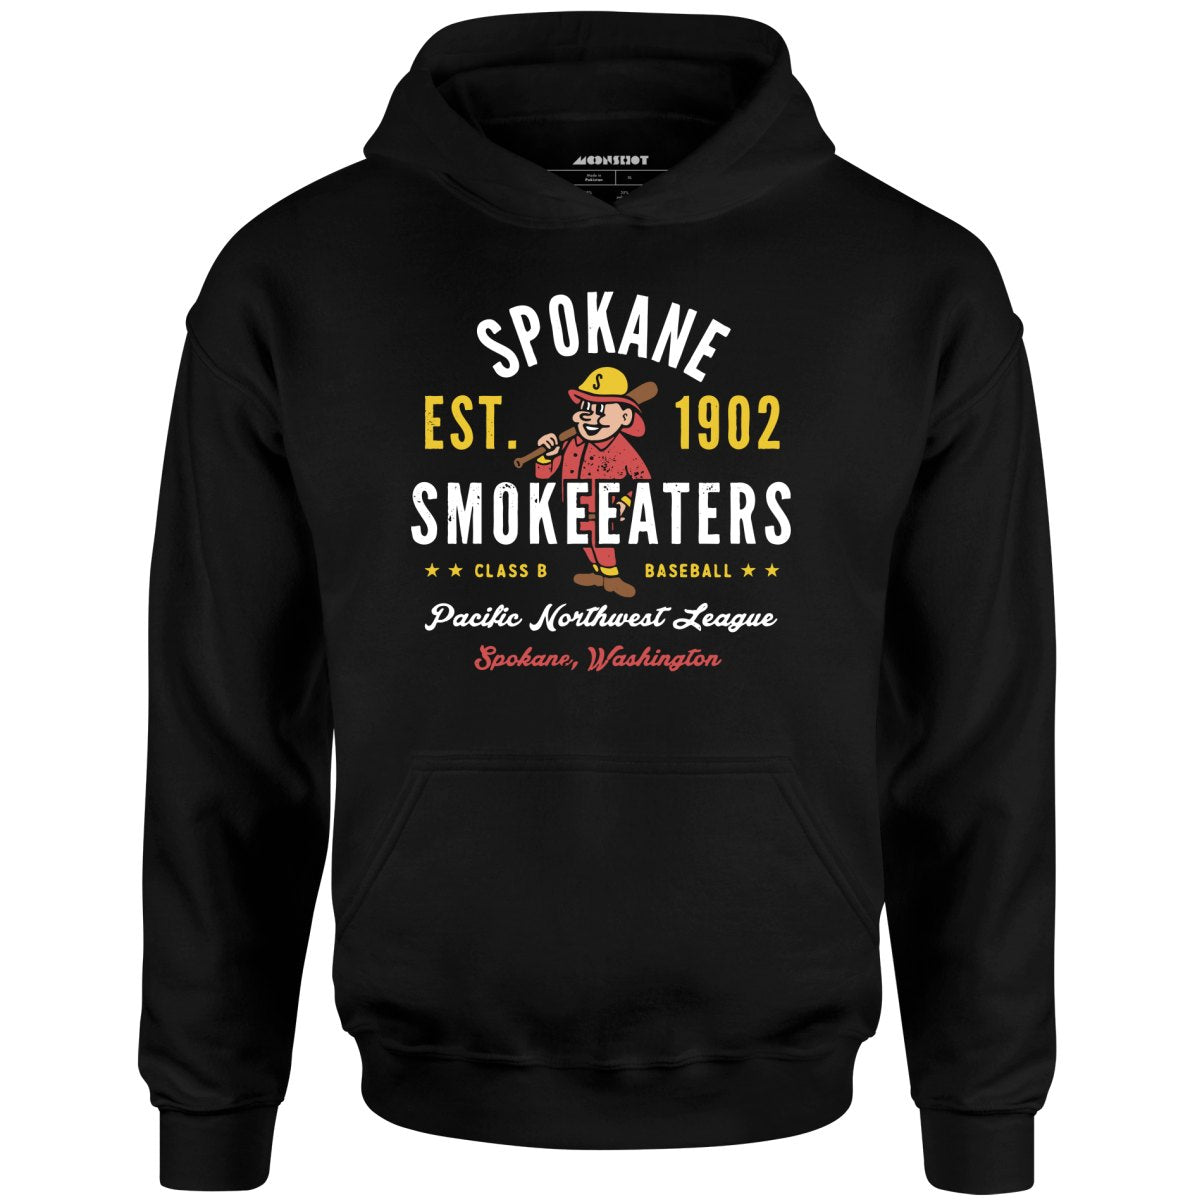 Spokane Smoke Eaters - Washington - Vintage Defunct Baseball Teams - Unisex Hoodie